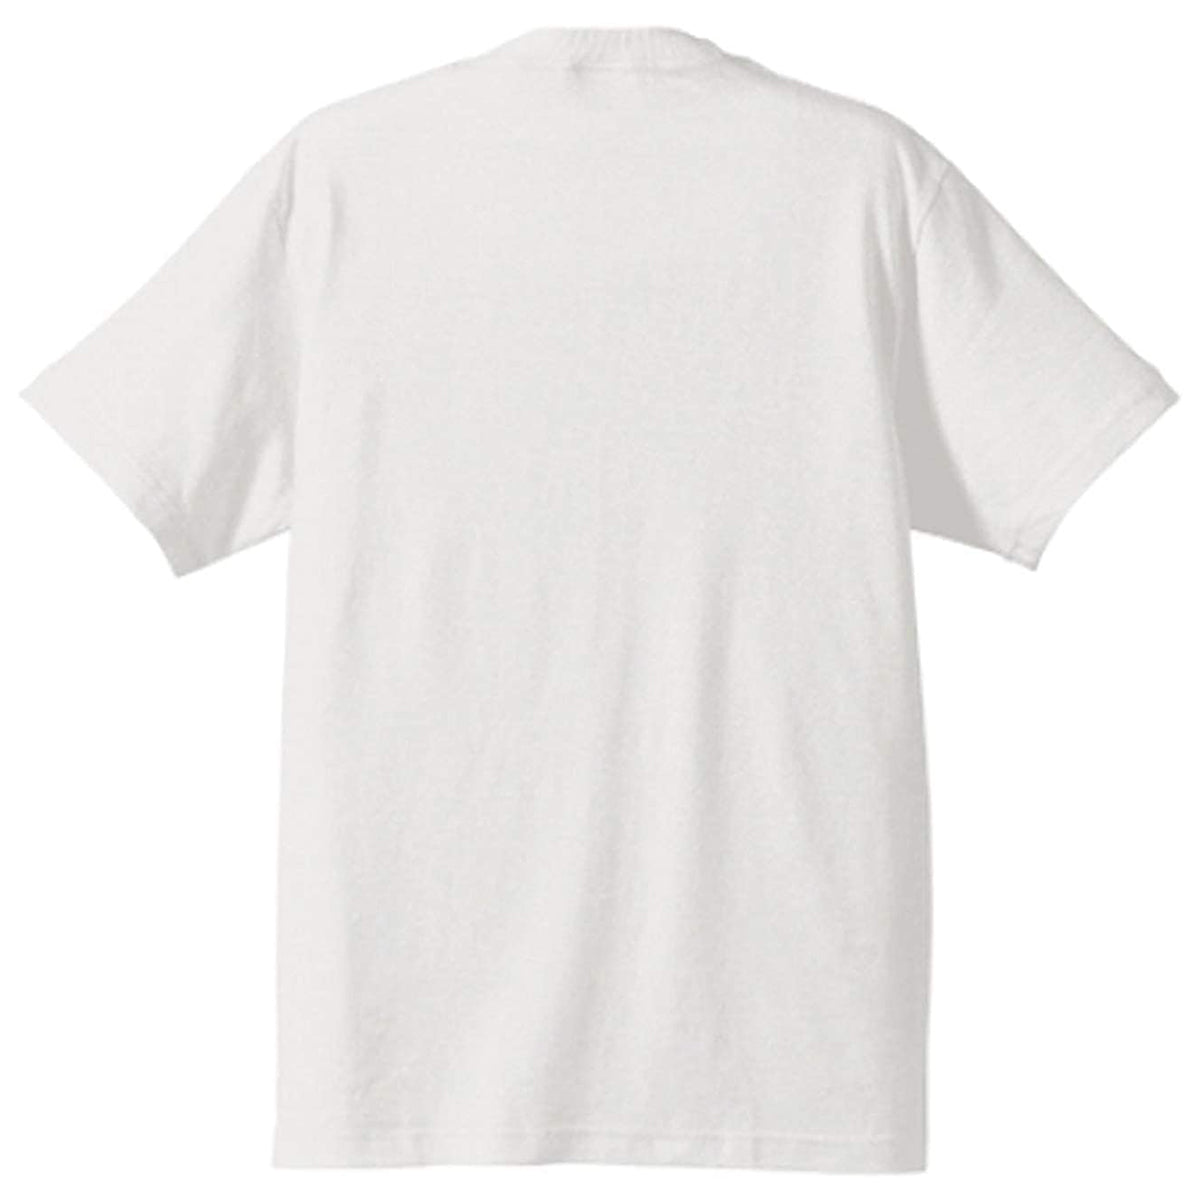 THE PORK FACE Tシャツ ユニセックス ホワイト